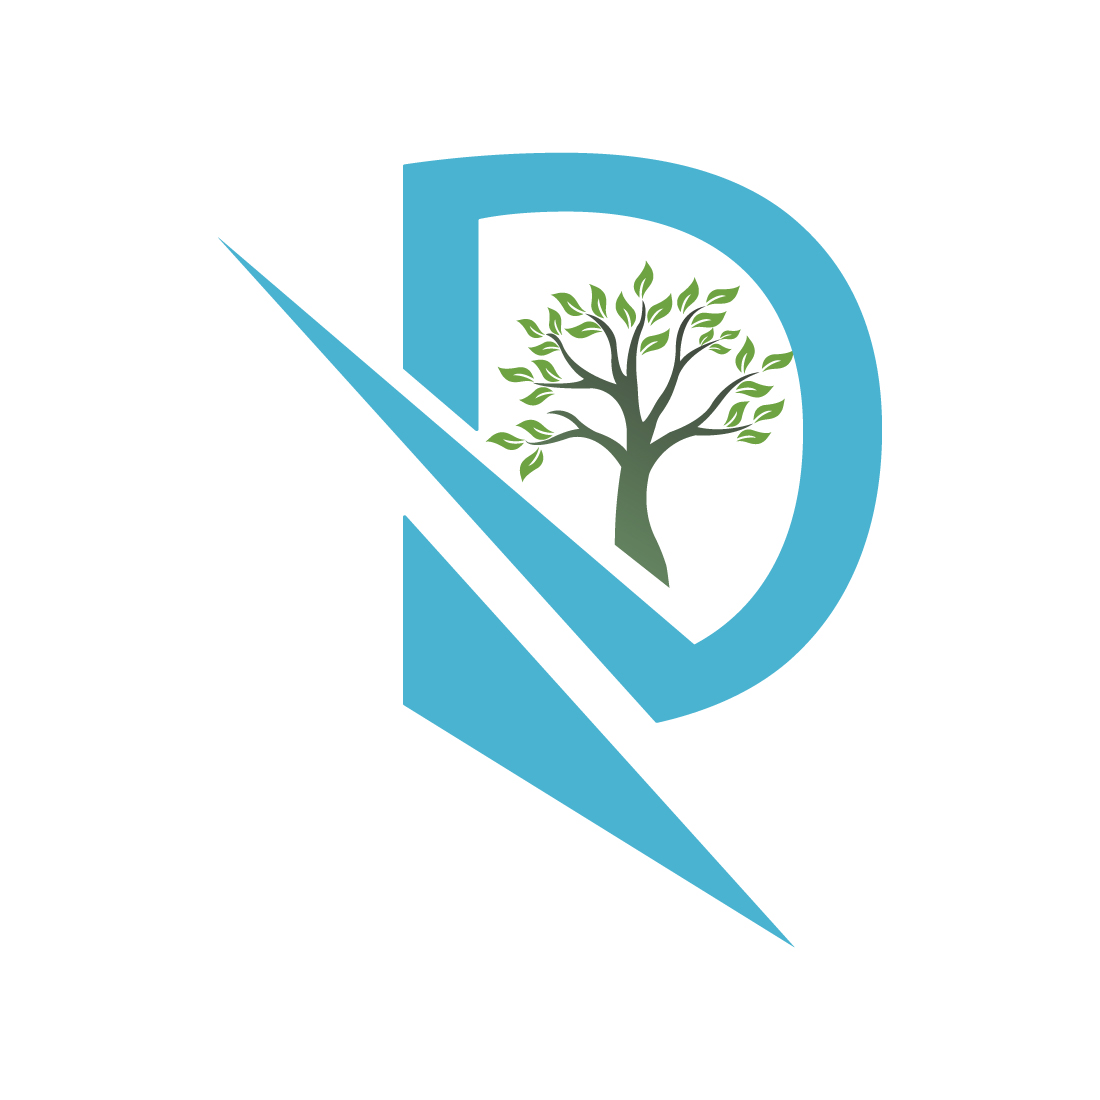 Professional D letters logo design vector images D Green Tree logo design best quality D logo best icon template illustration D Tree logo design or D Care tree logo monogram preview image.